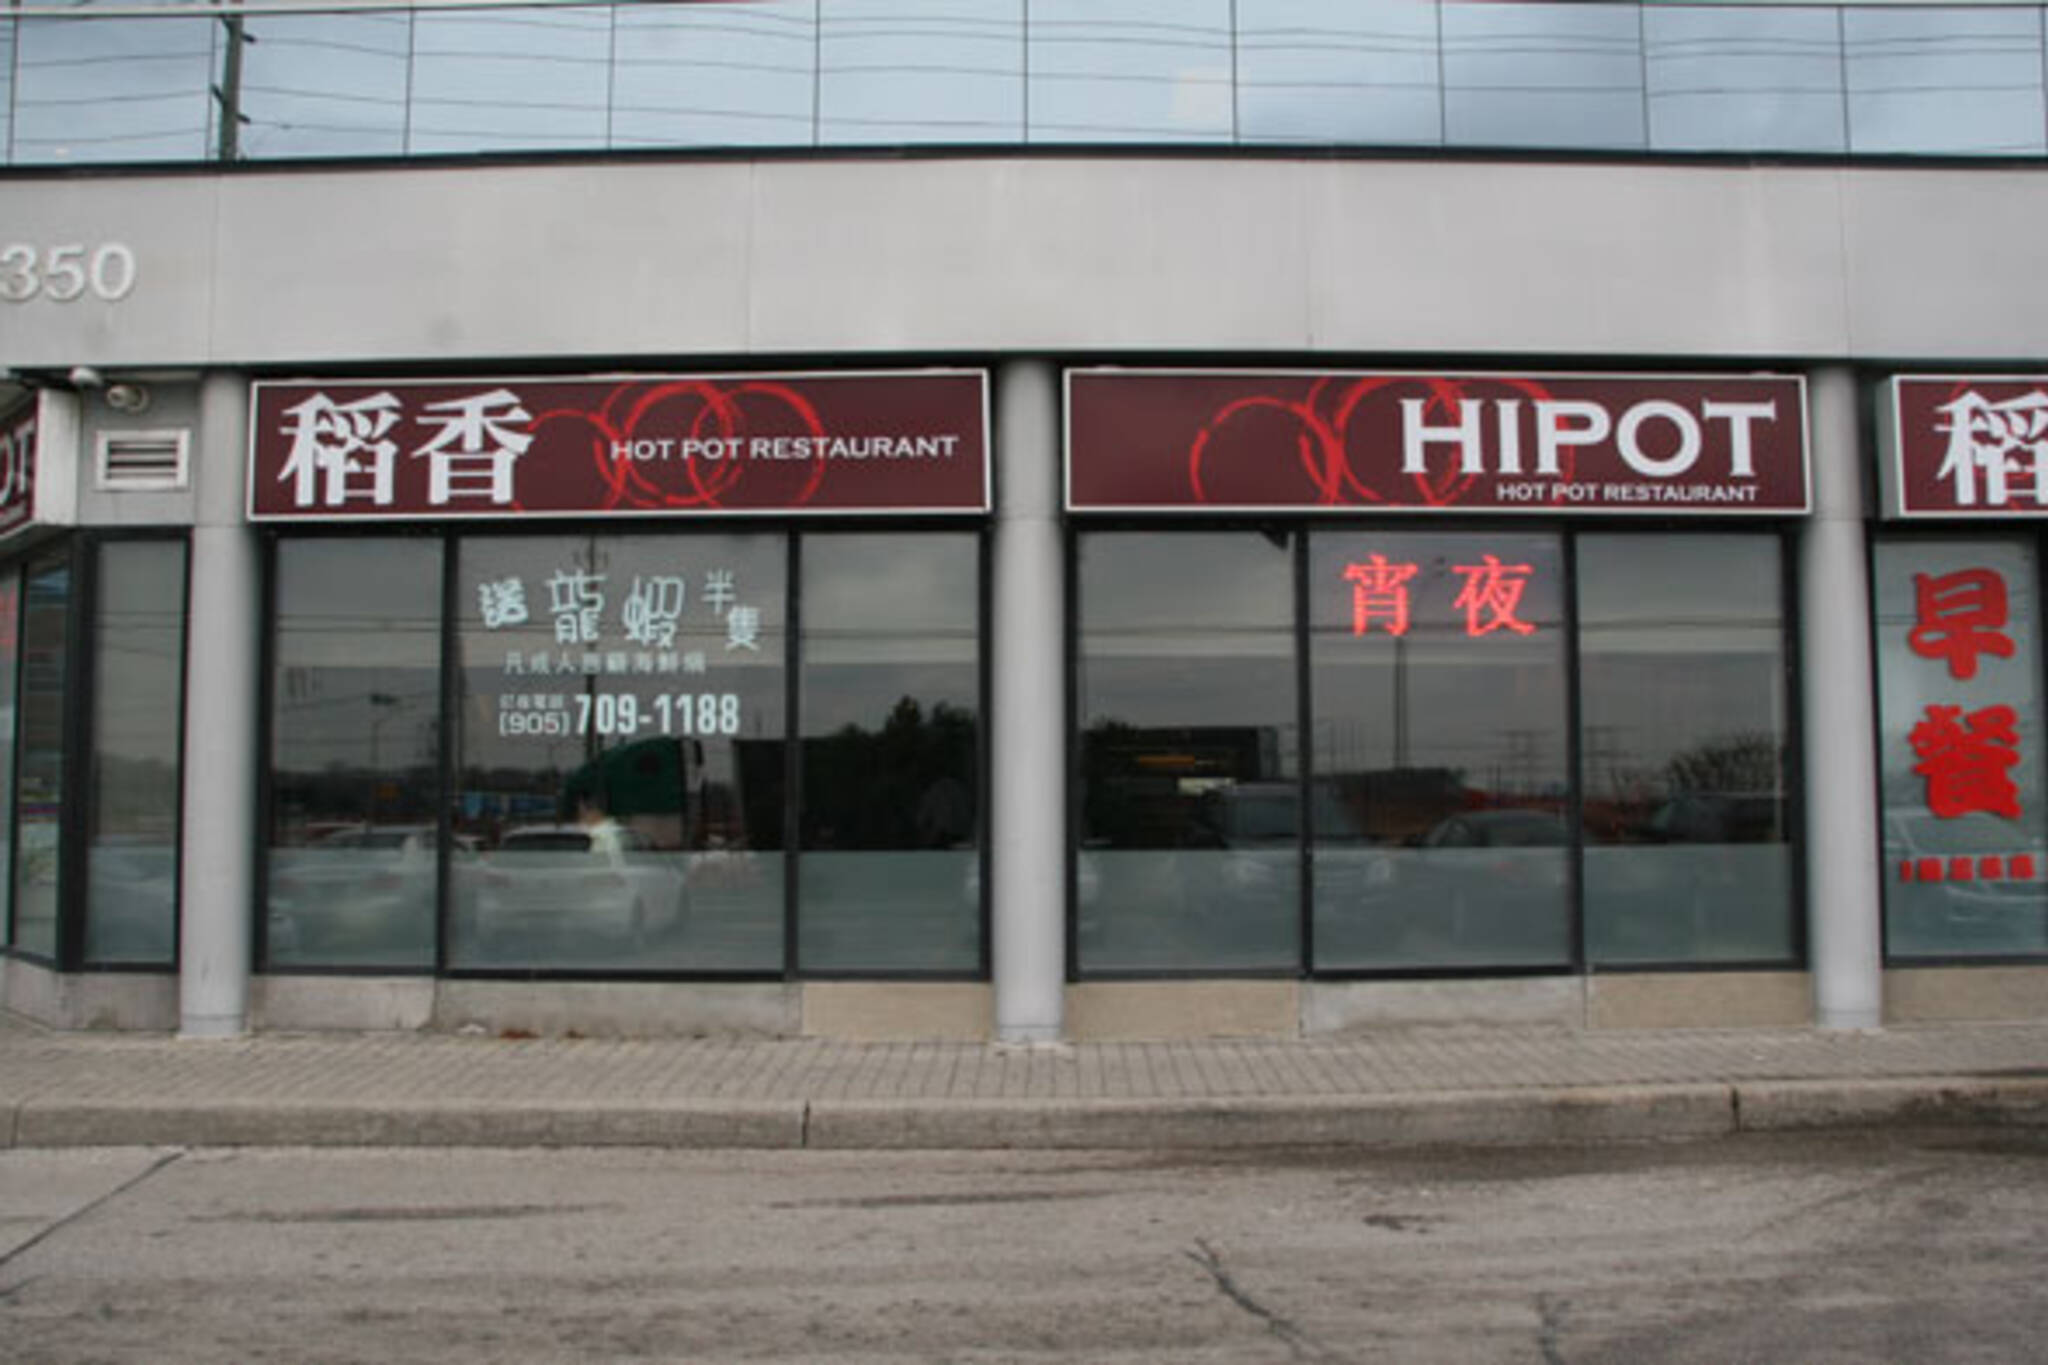 Hipot Hot Pot Restaurant